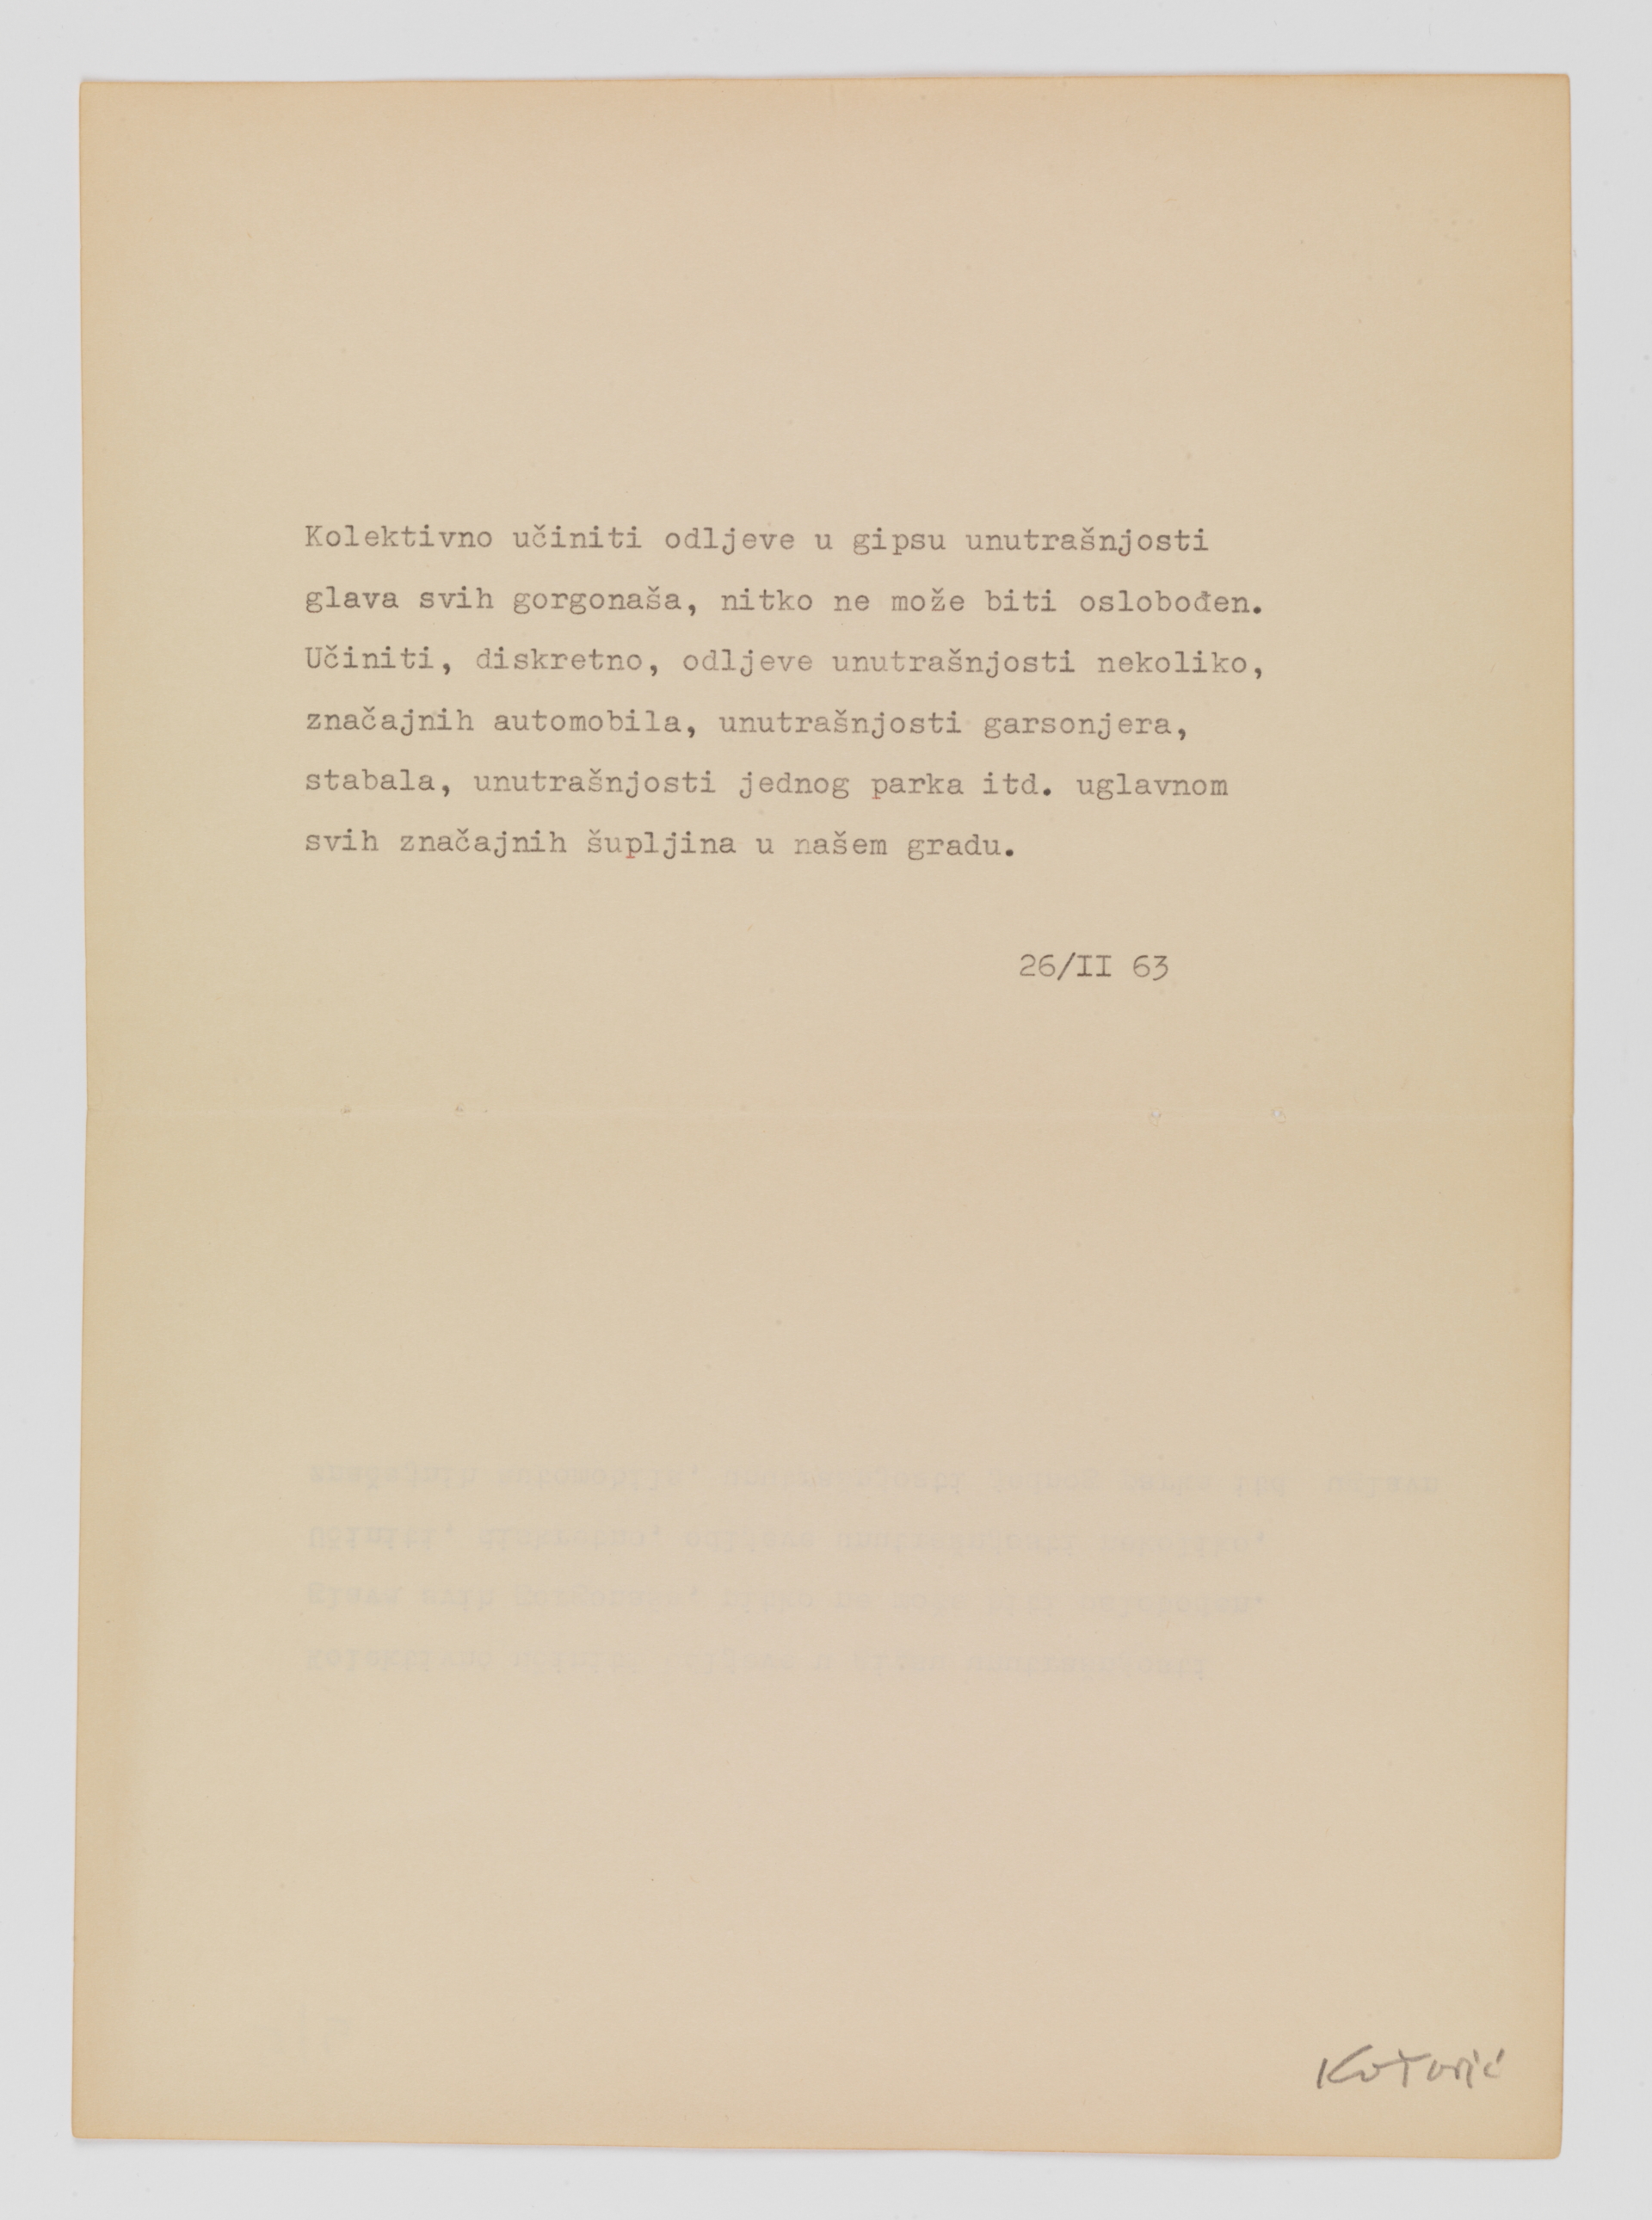 Collective Work, typescript, 29 x 21 cm, 1963